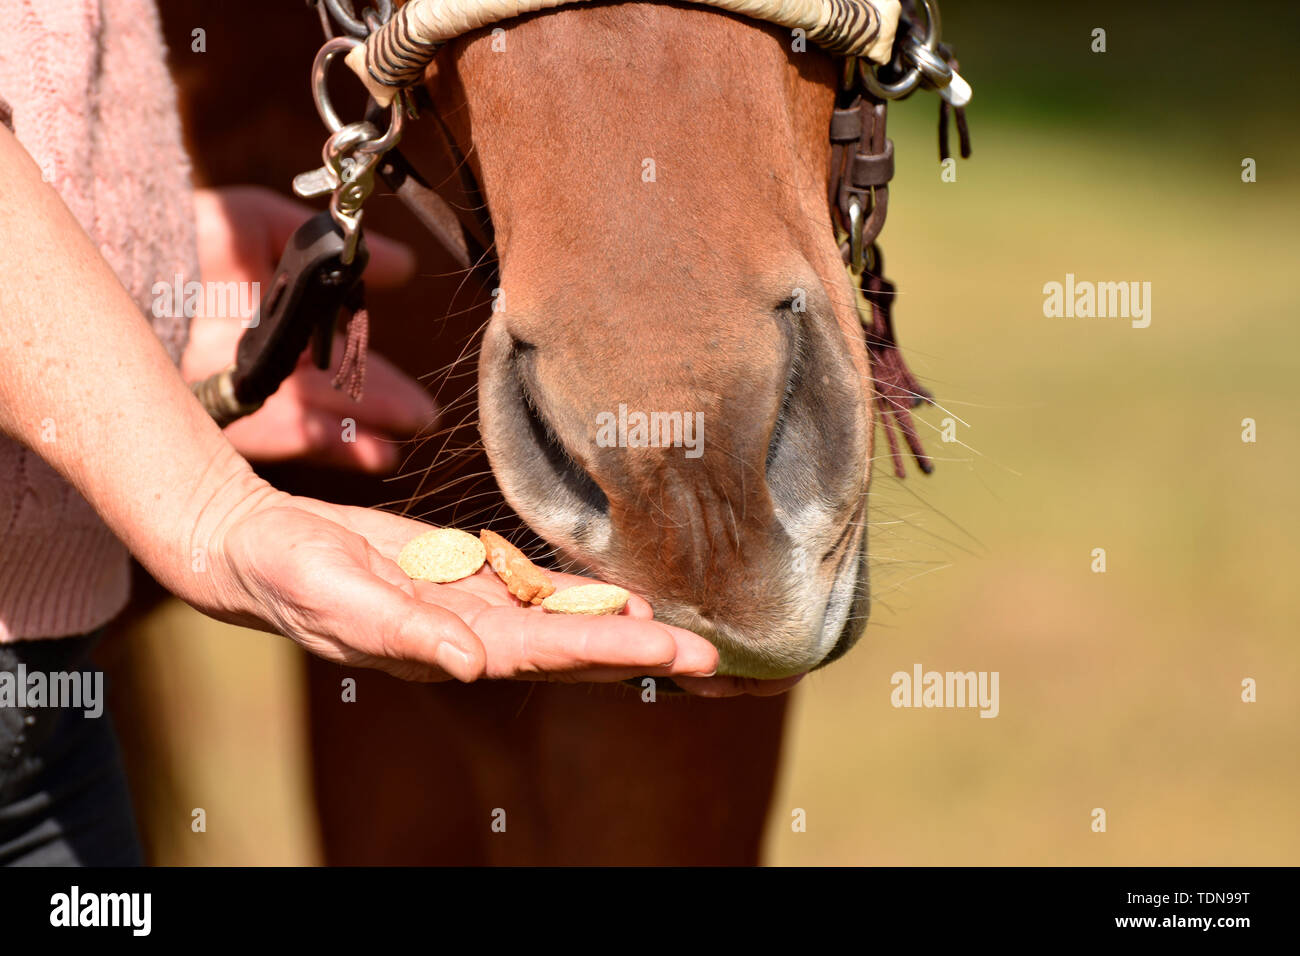 Horse getting Treat, behaviour Stock Photo